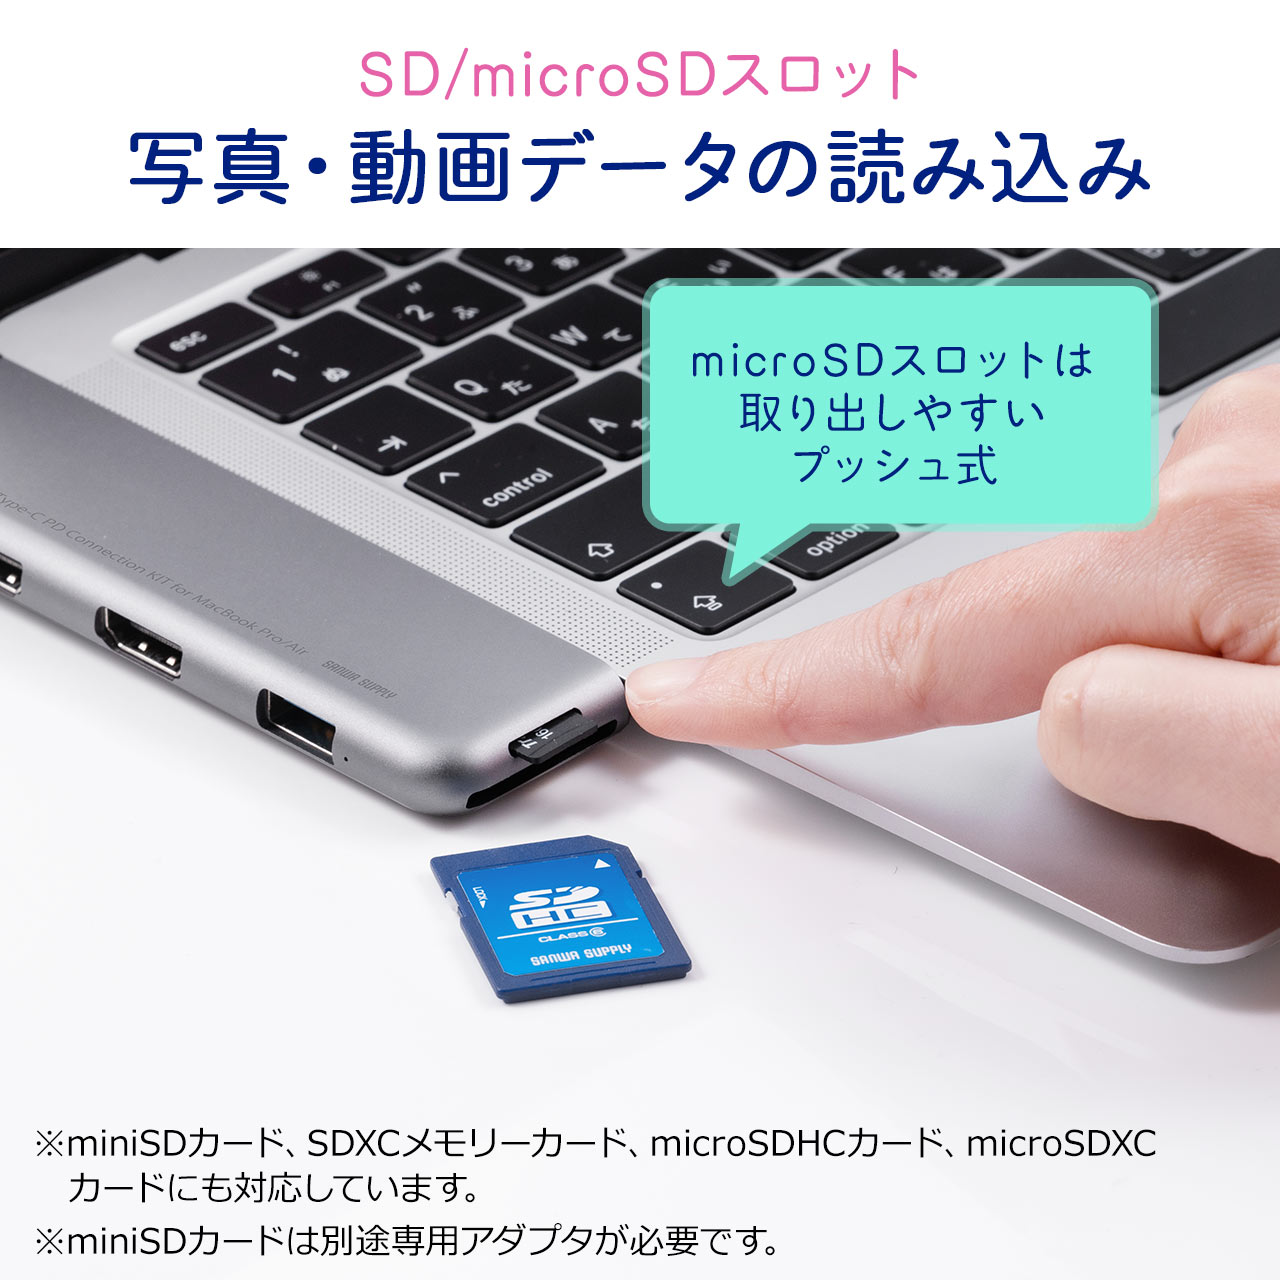 MacBook Pro/AirphbLOXe[V HDMI USB A USB Type-C LANڑ PD60W SD/microSD 400-ADR328GPD